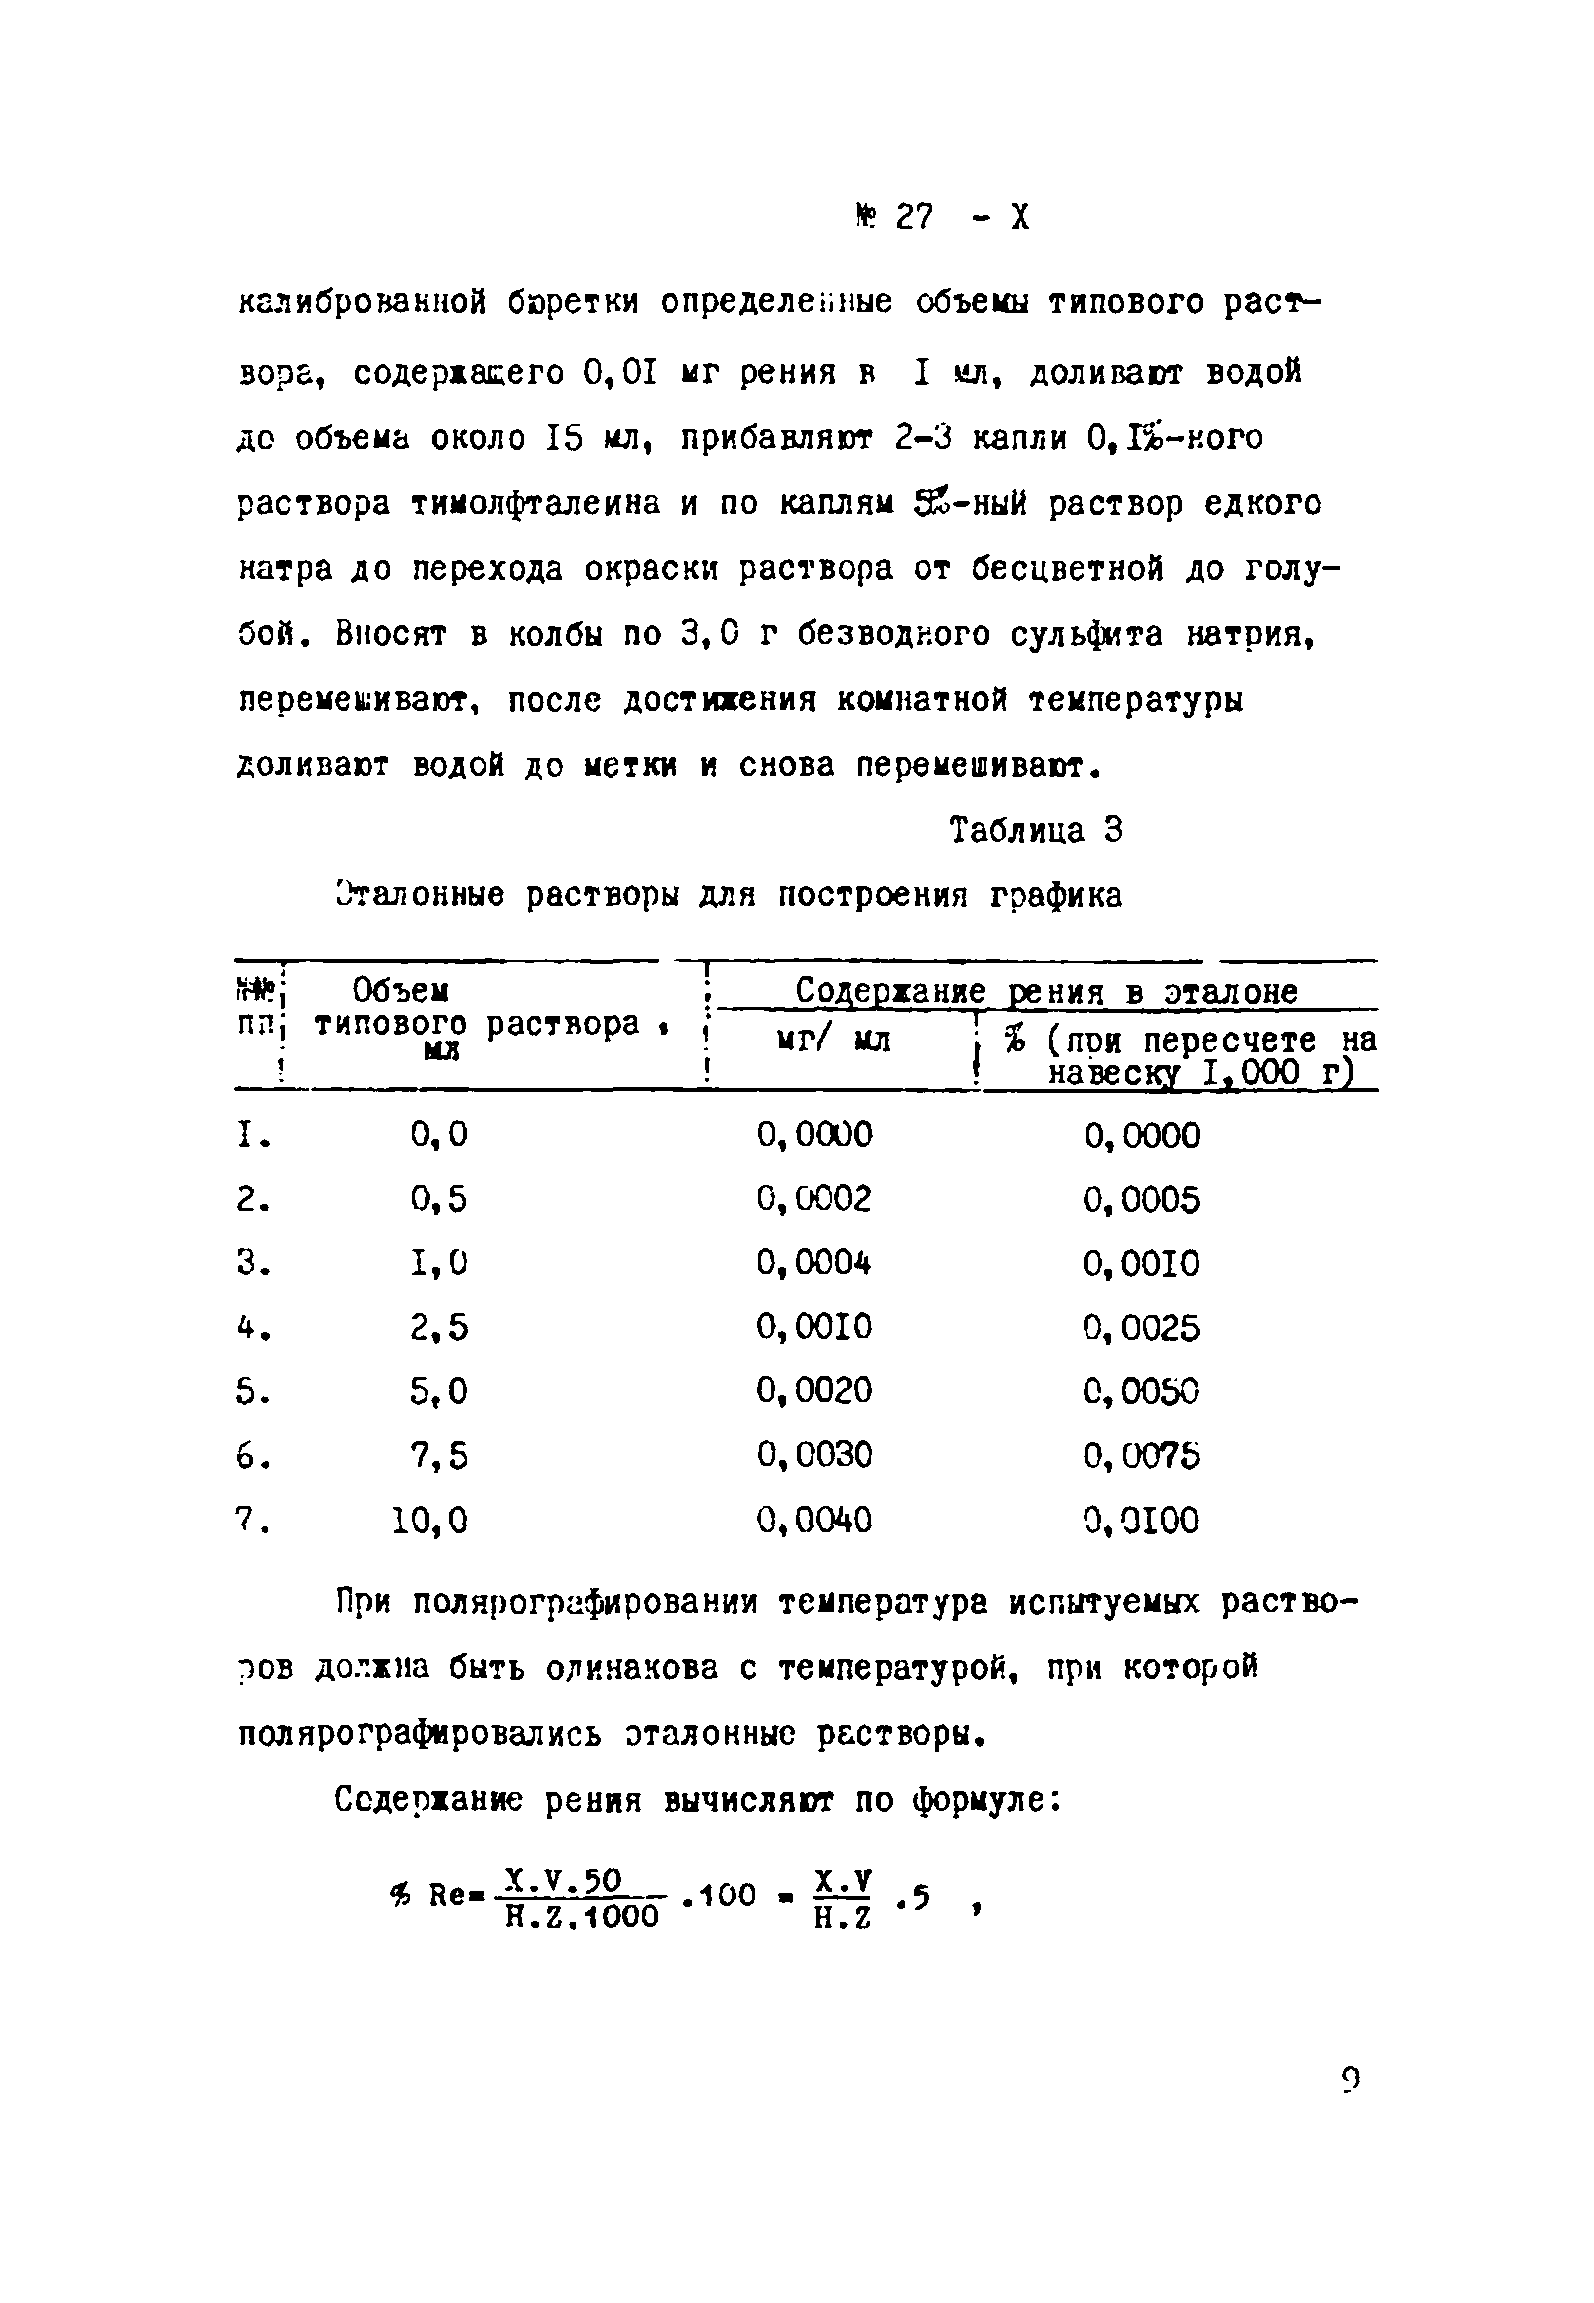 Инструкция НСАМ 27-Х